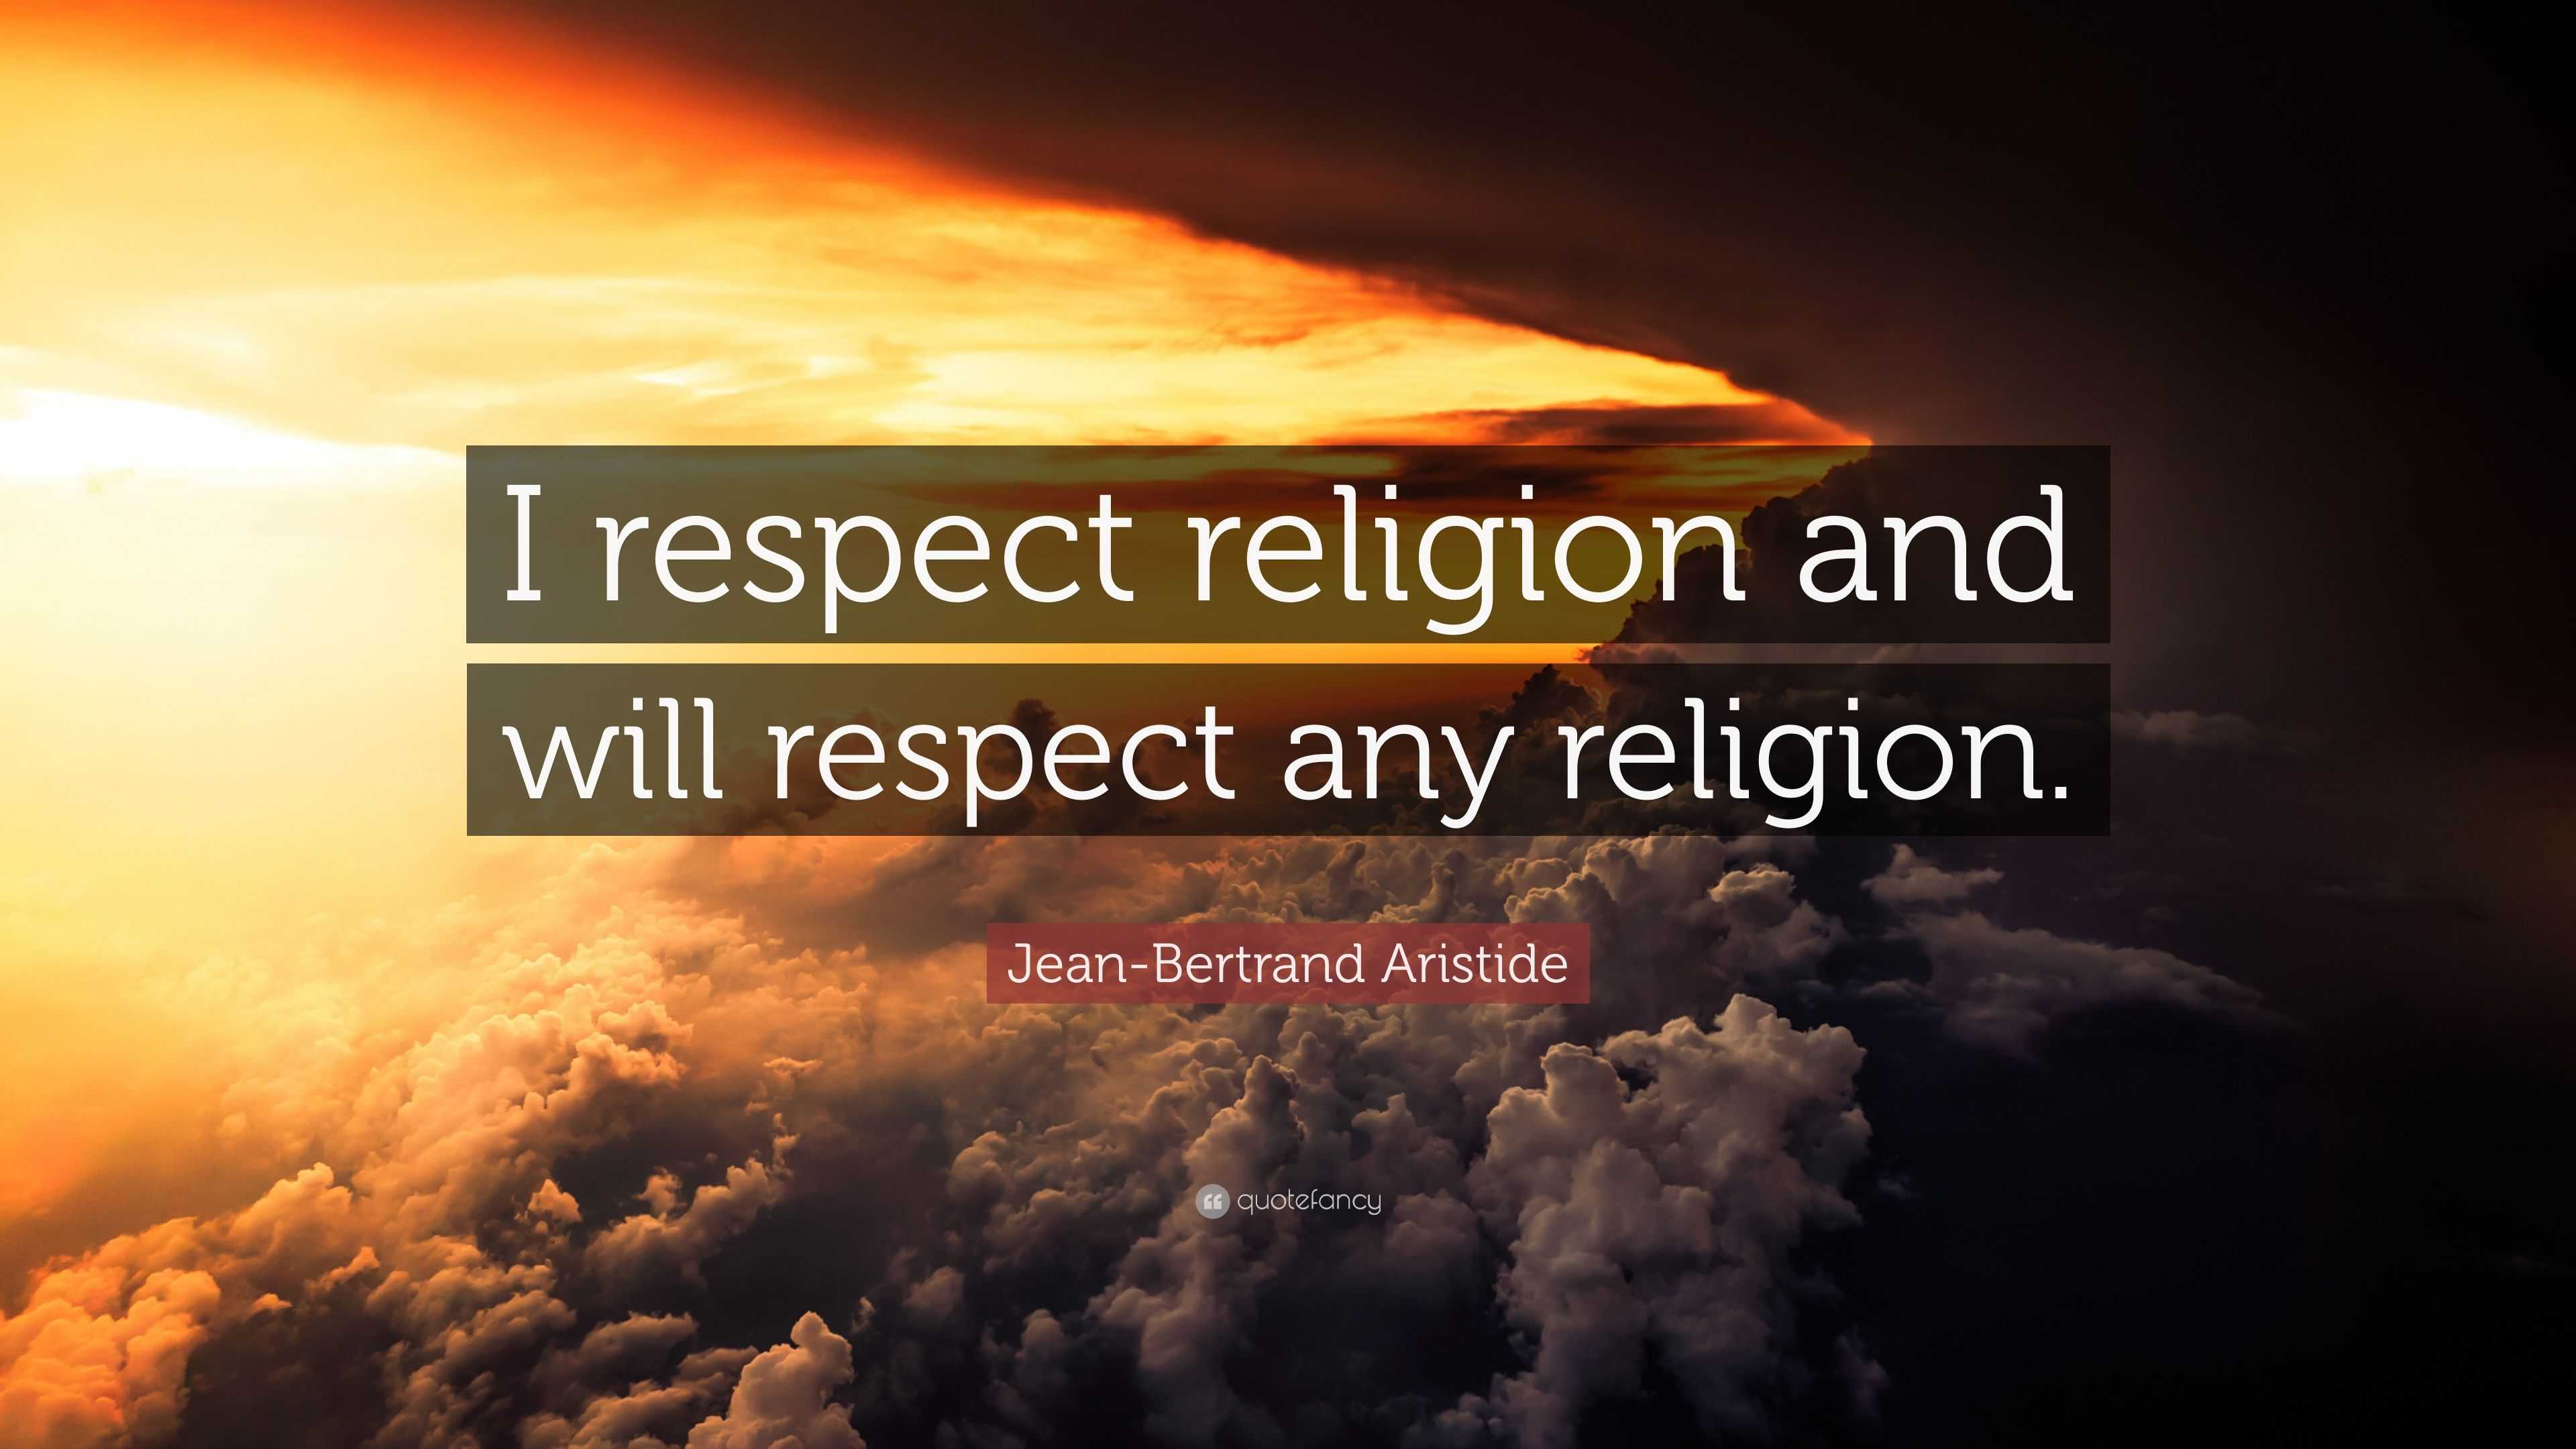 Jean Bertrand Aristide Quote “i Respect Religion And Will Respect Any Religion ”